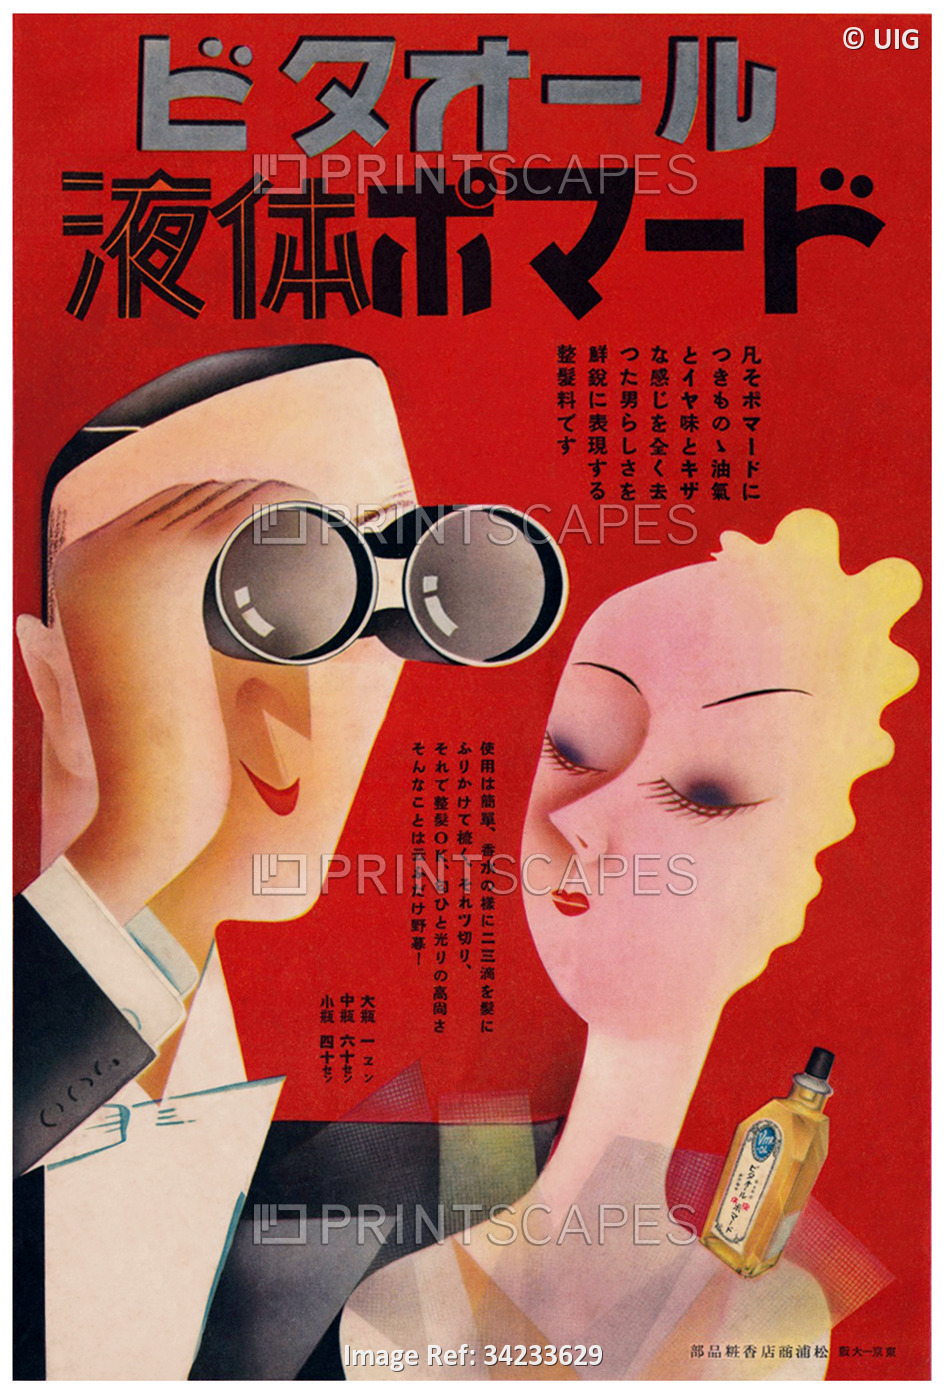 Japan: Advertisement for liquid pomade from Matsuura Cosmerics, Bitaol, 1937